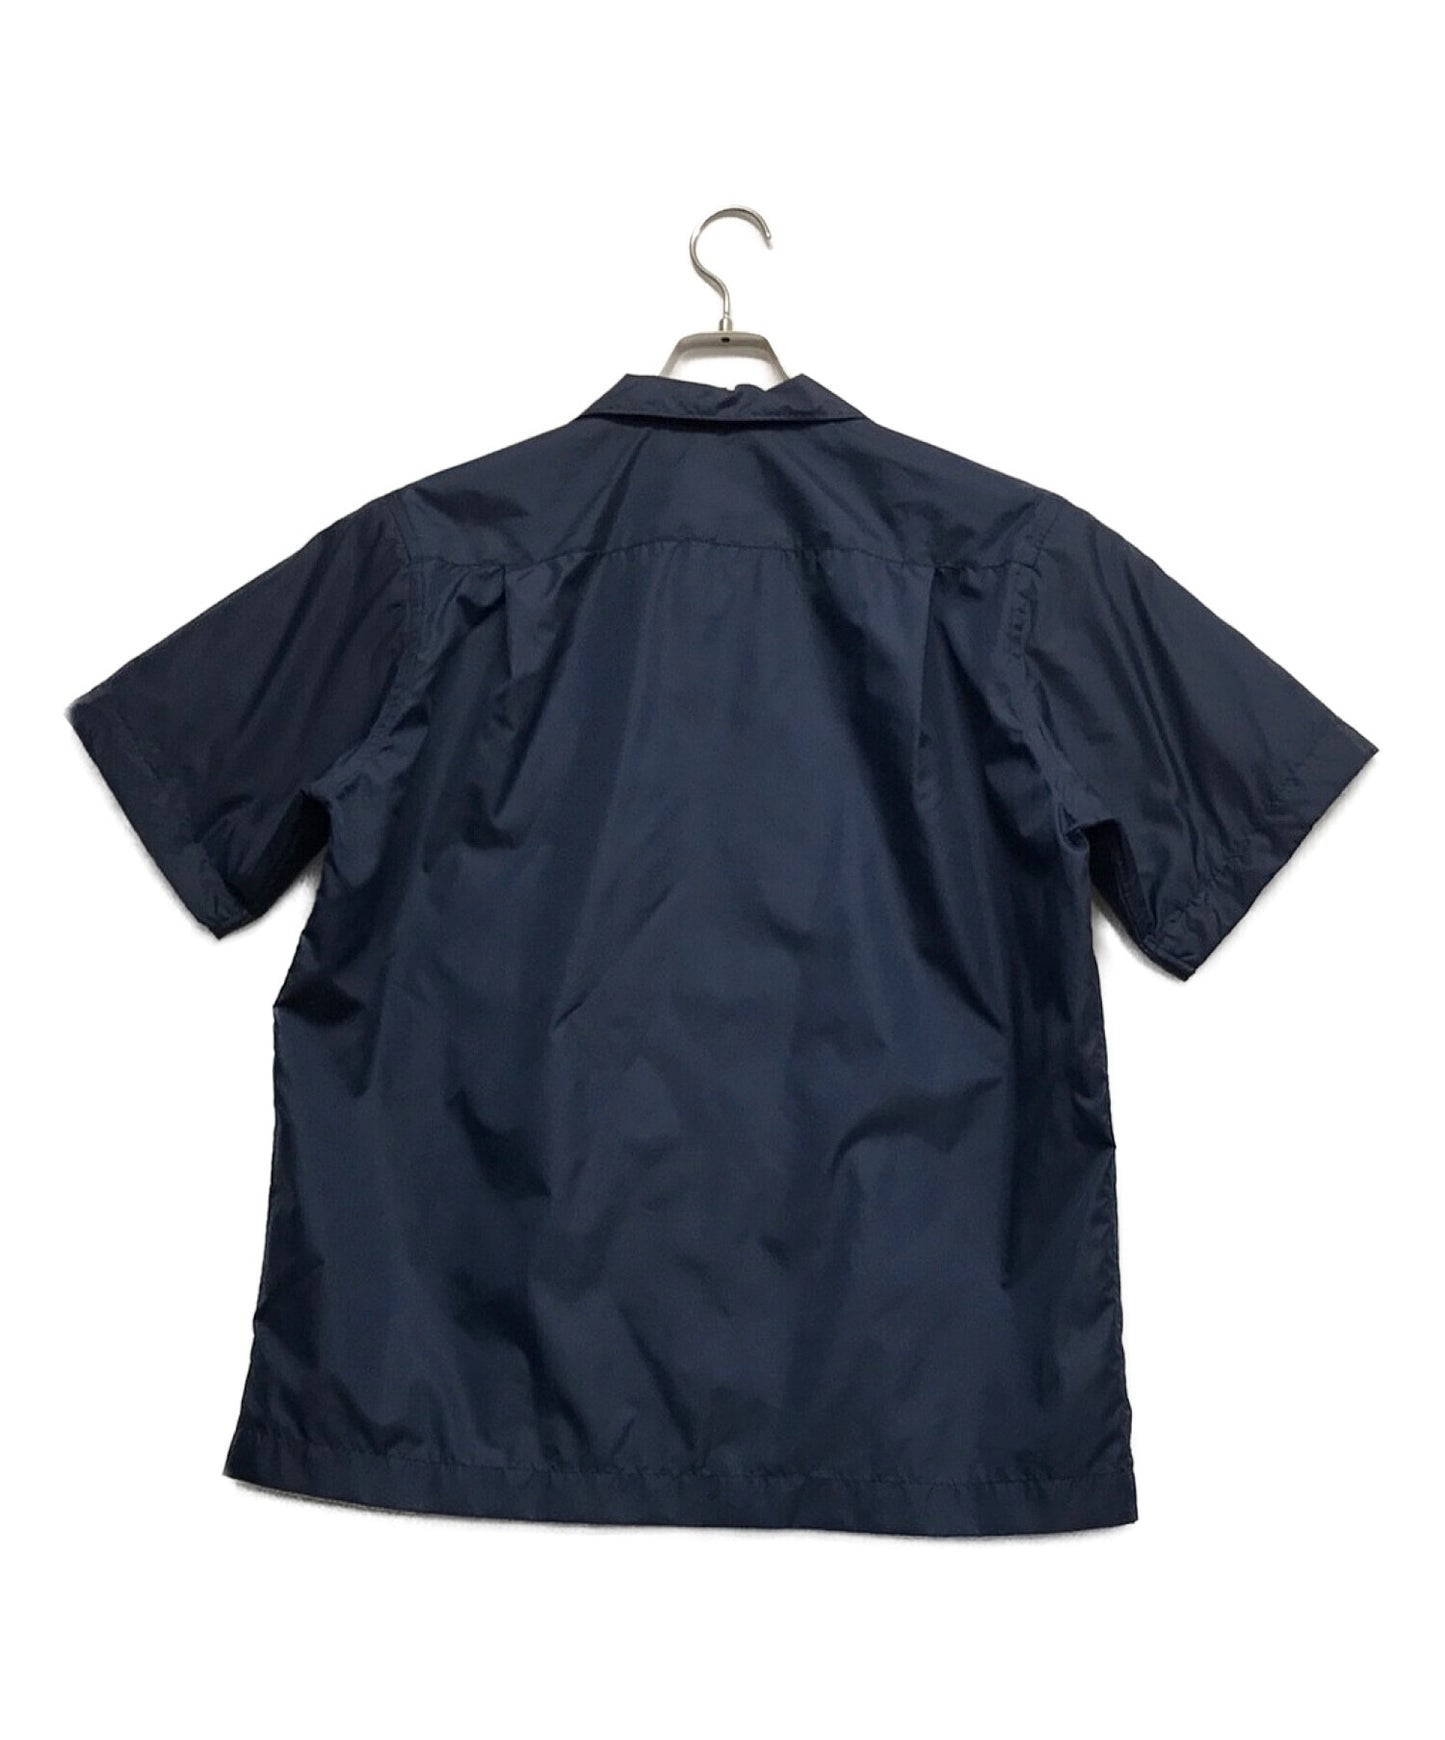 Comme des Garcons Homme Plus 90年代的袖子荷叶边尼龙开放式衬衫短袖衬衫衬衫PB-100230 AD1998